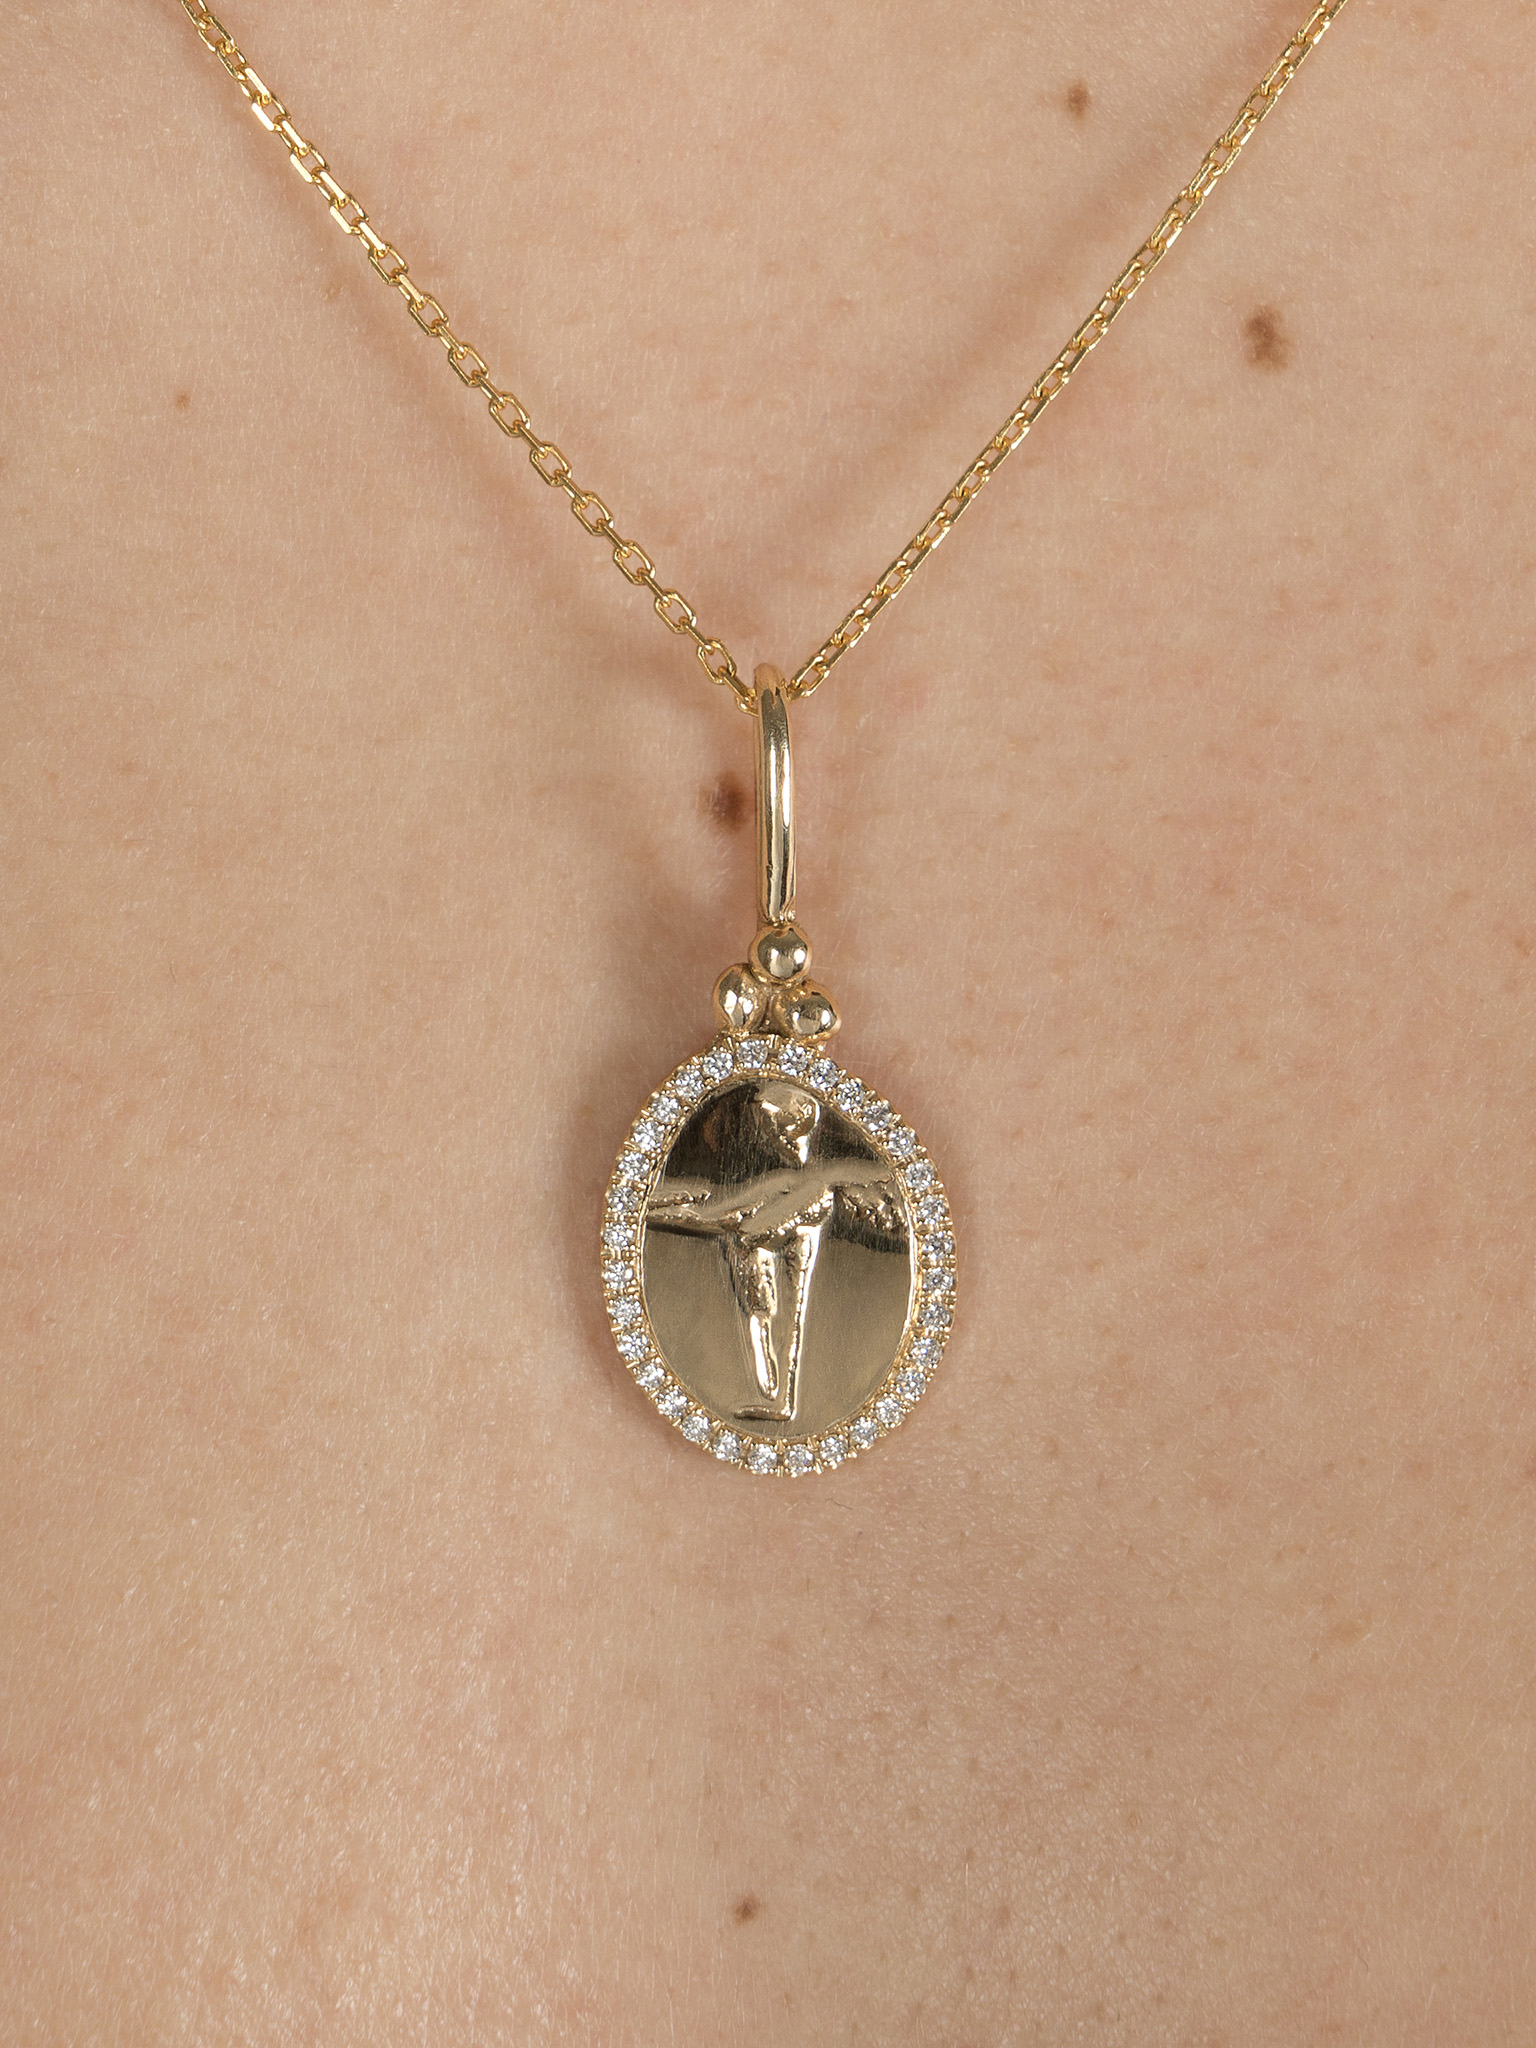 Peristera pendant with diamonds - 18k solid gold